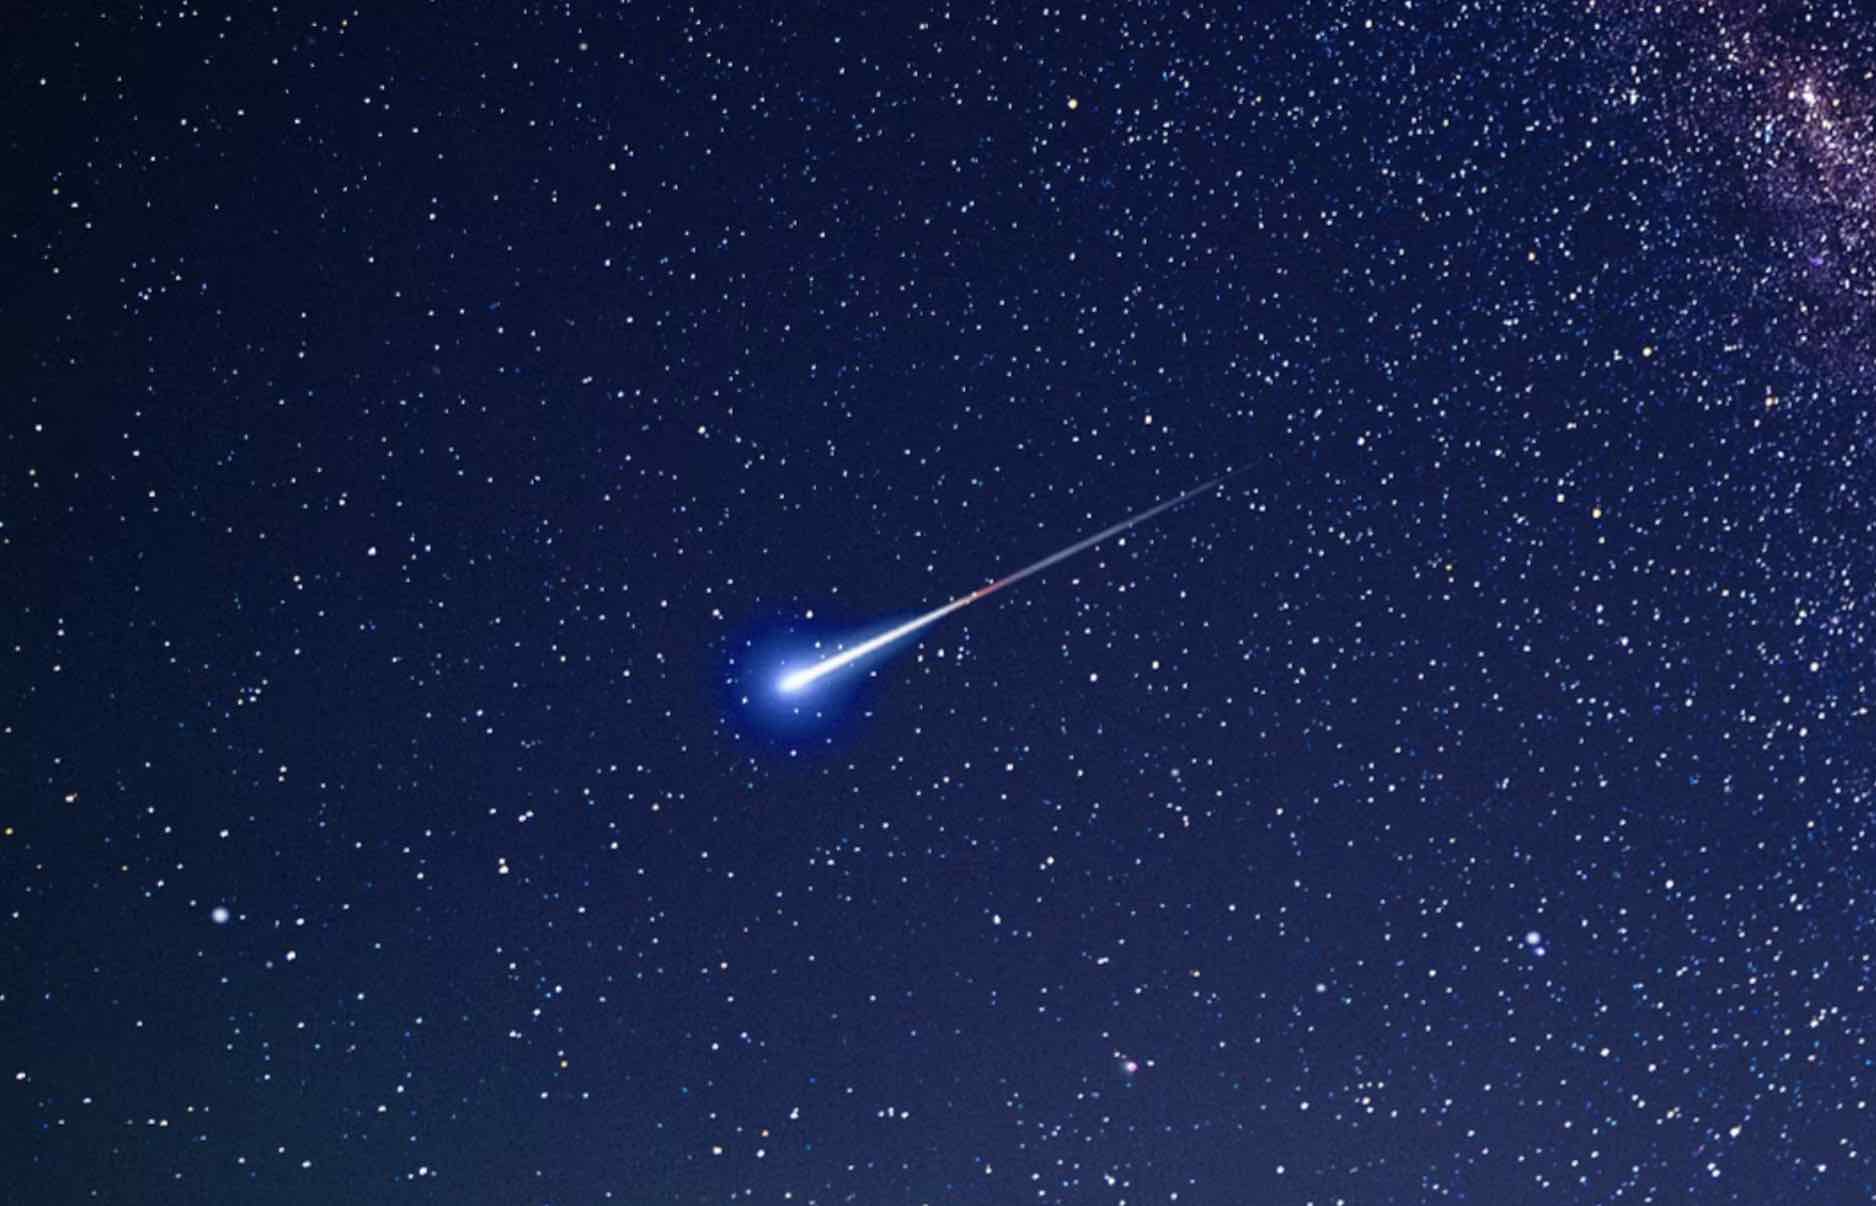 Interstellar meteor or "shooting star."